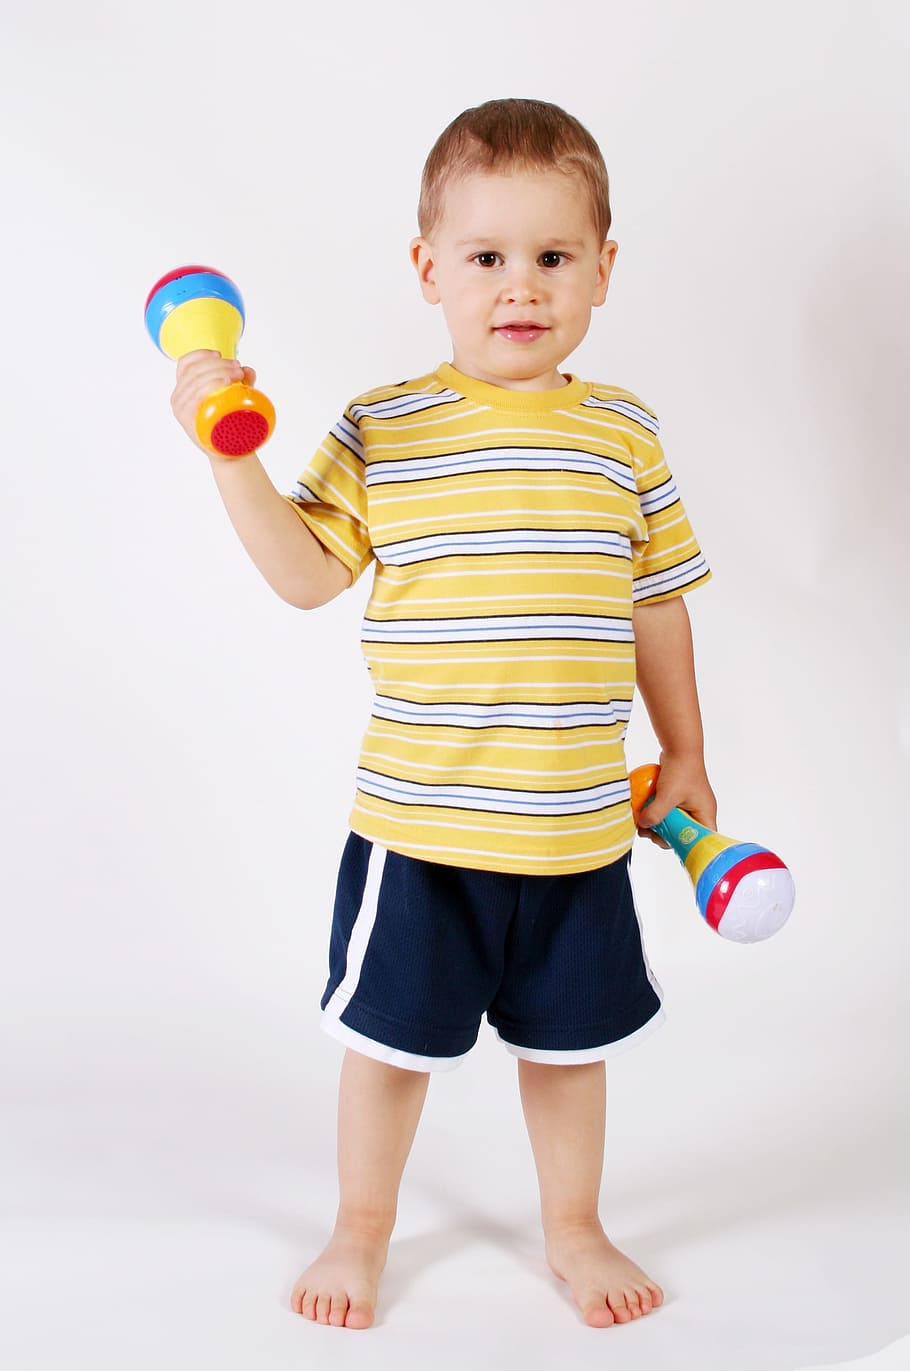 boy holding plastic toys, School, Smiling, Children, playing